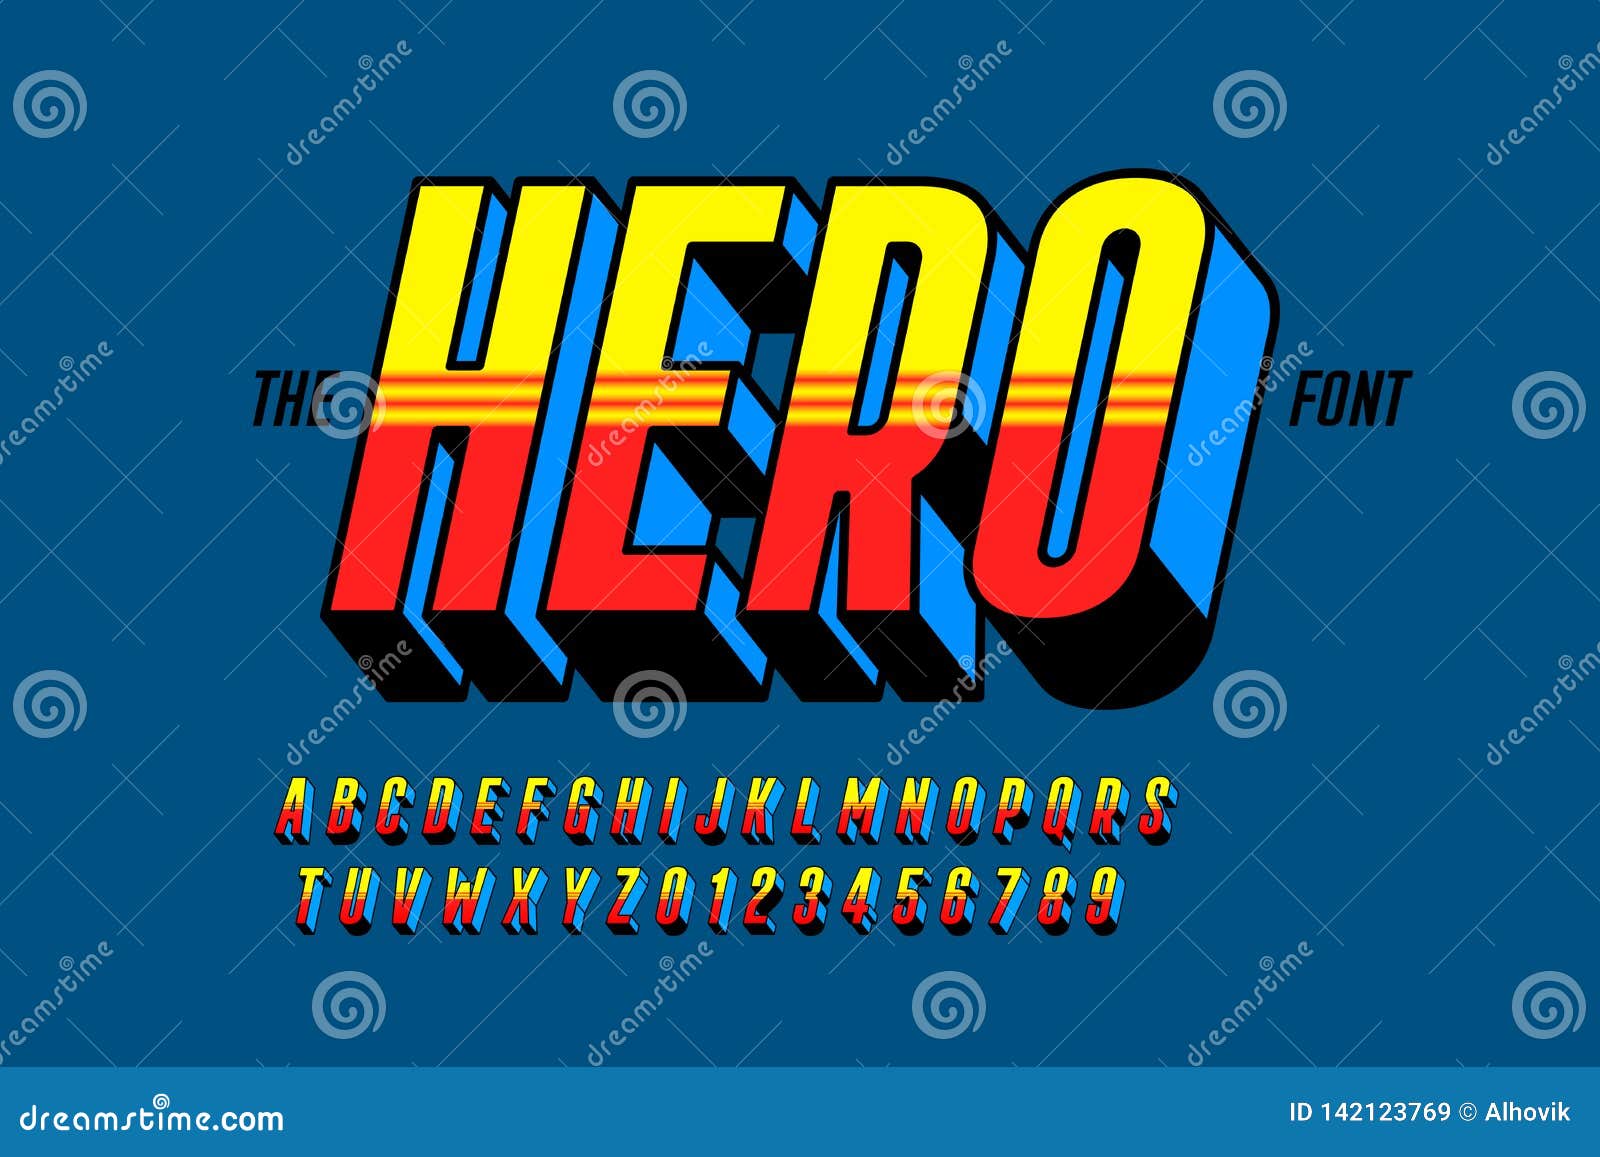 comics style font , superhero inspired alphabet